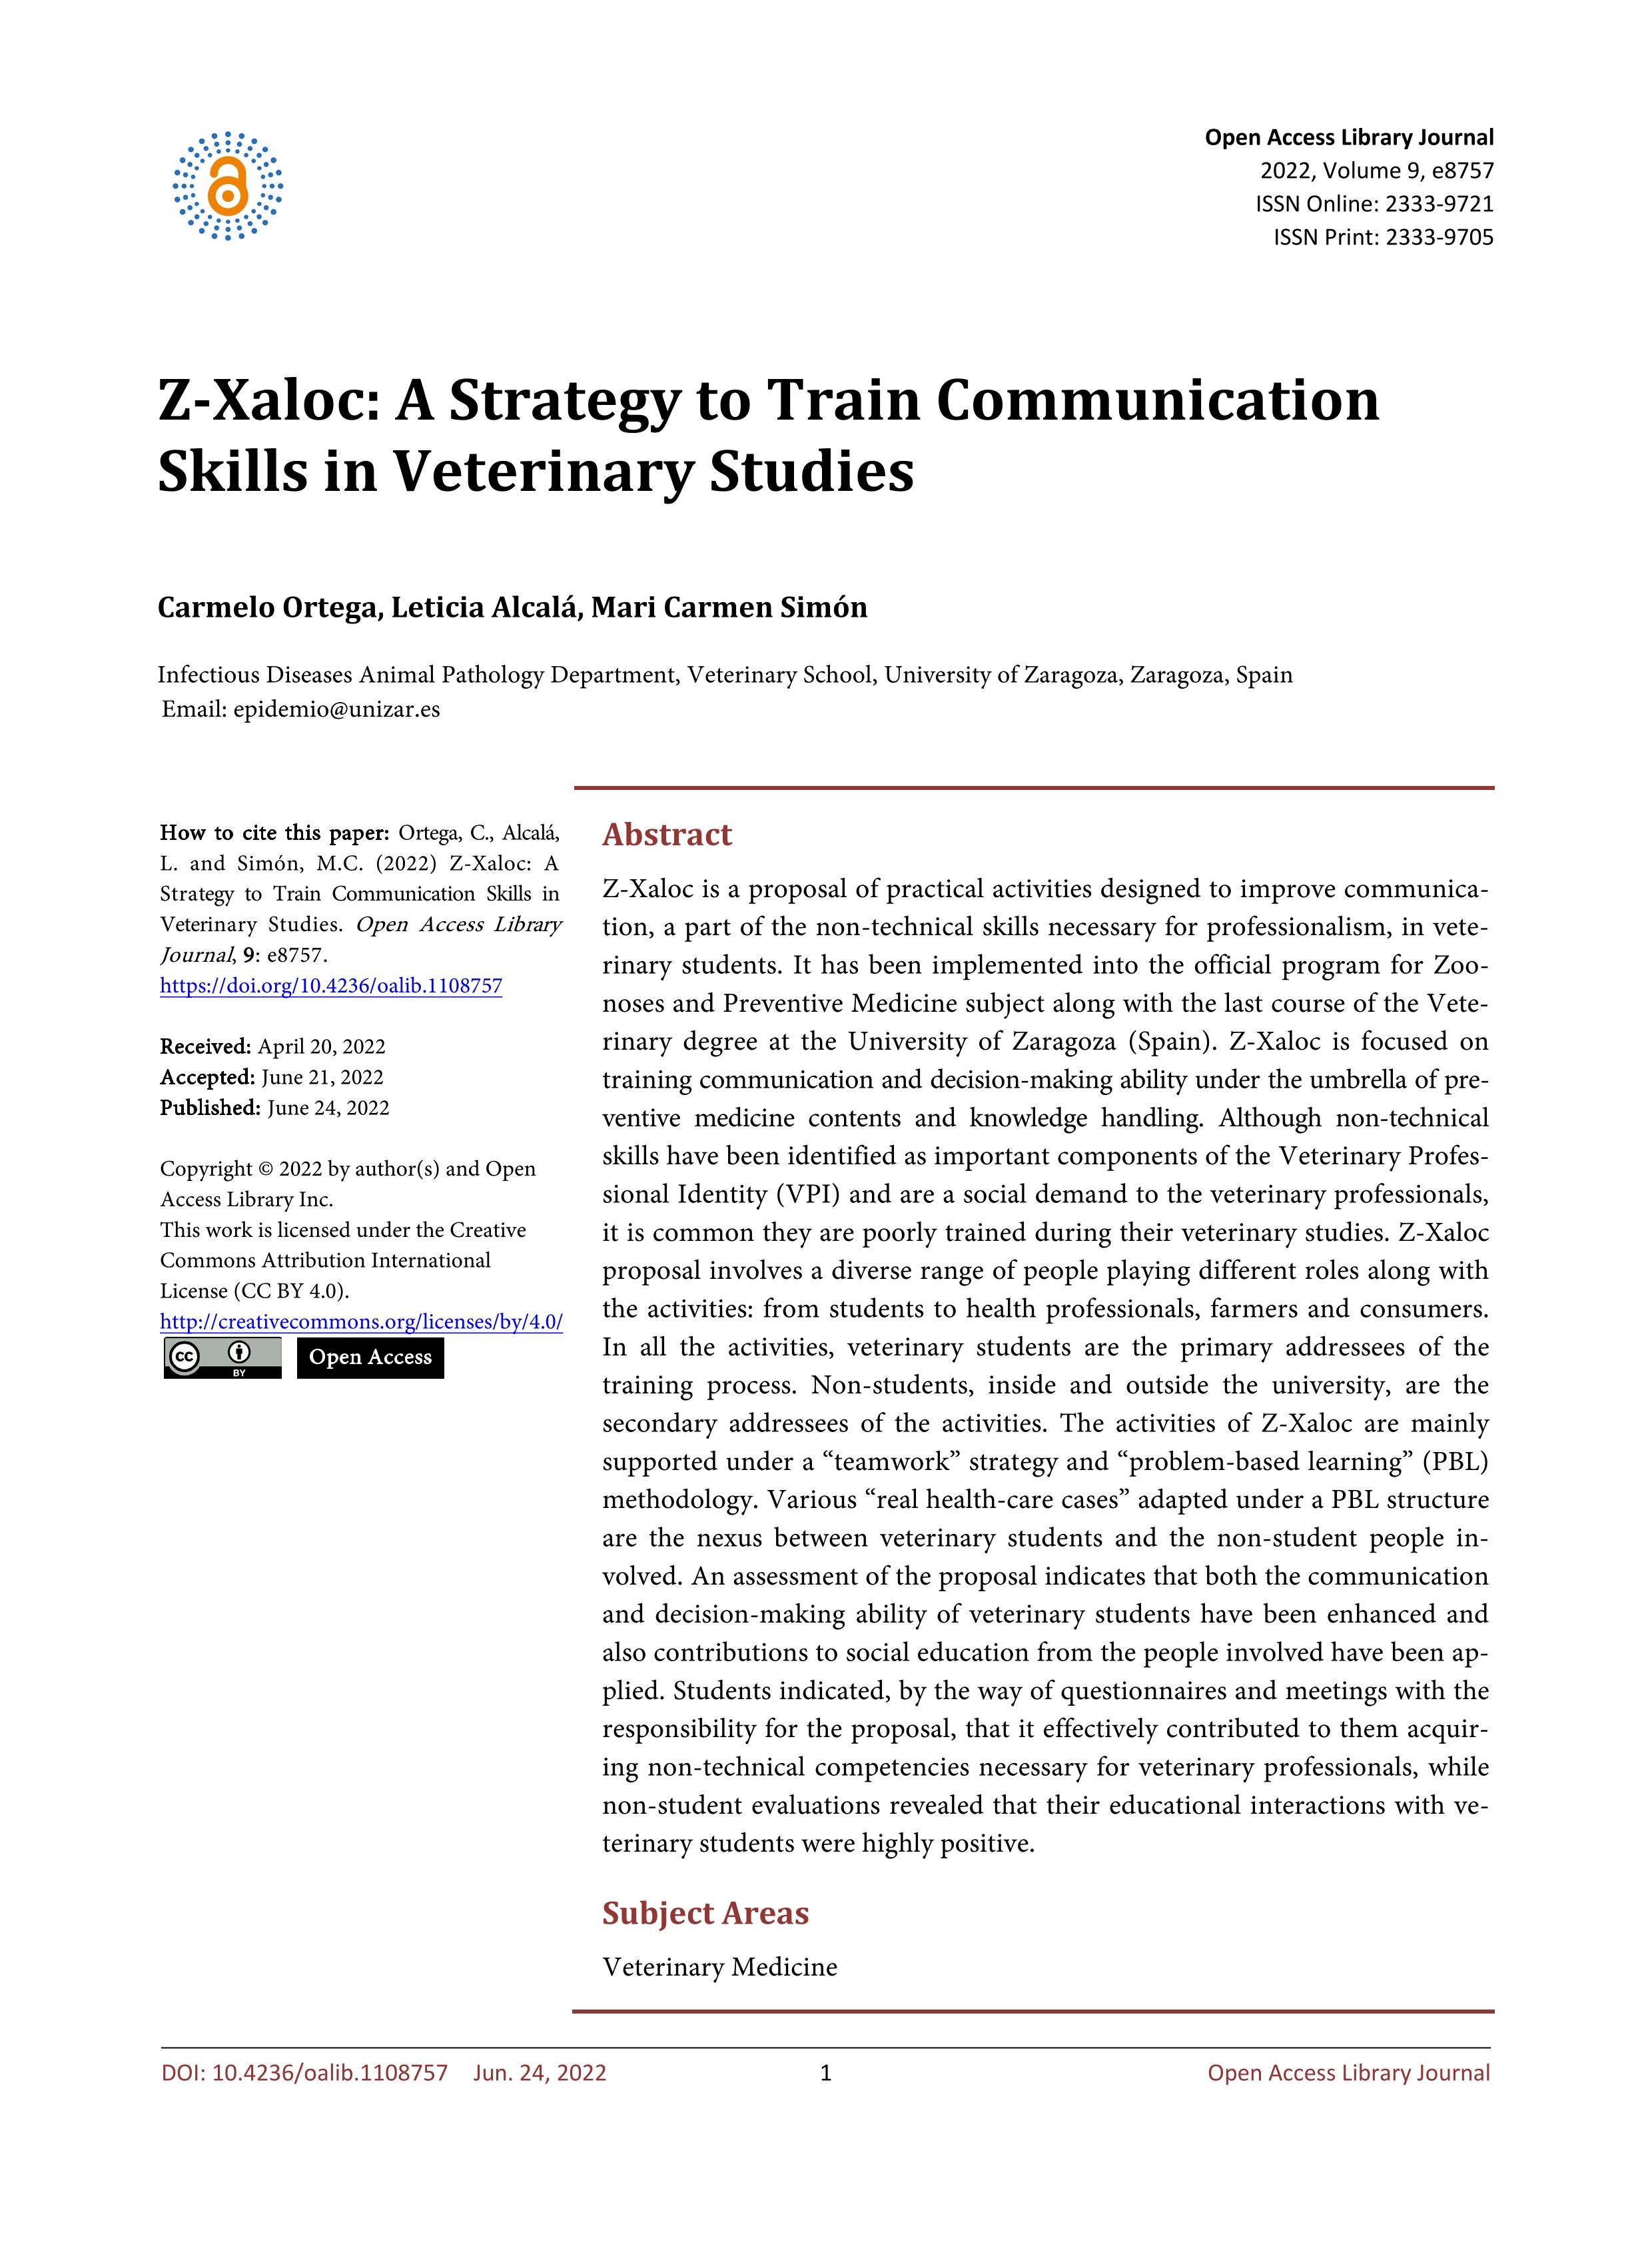 Z-Xaloc: A Strategy to Train Communication Skills in Veterinary Studies